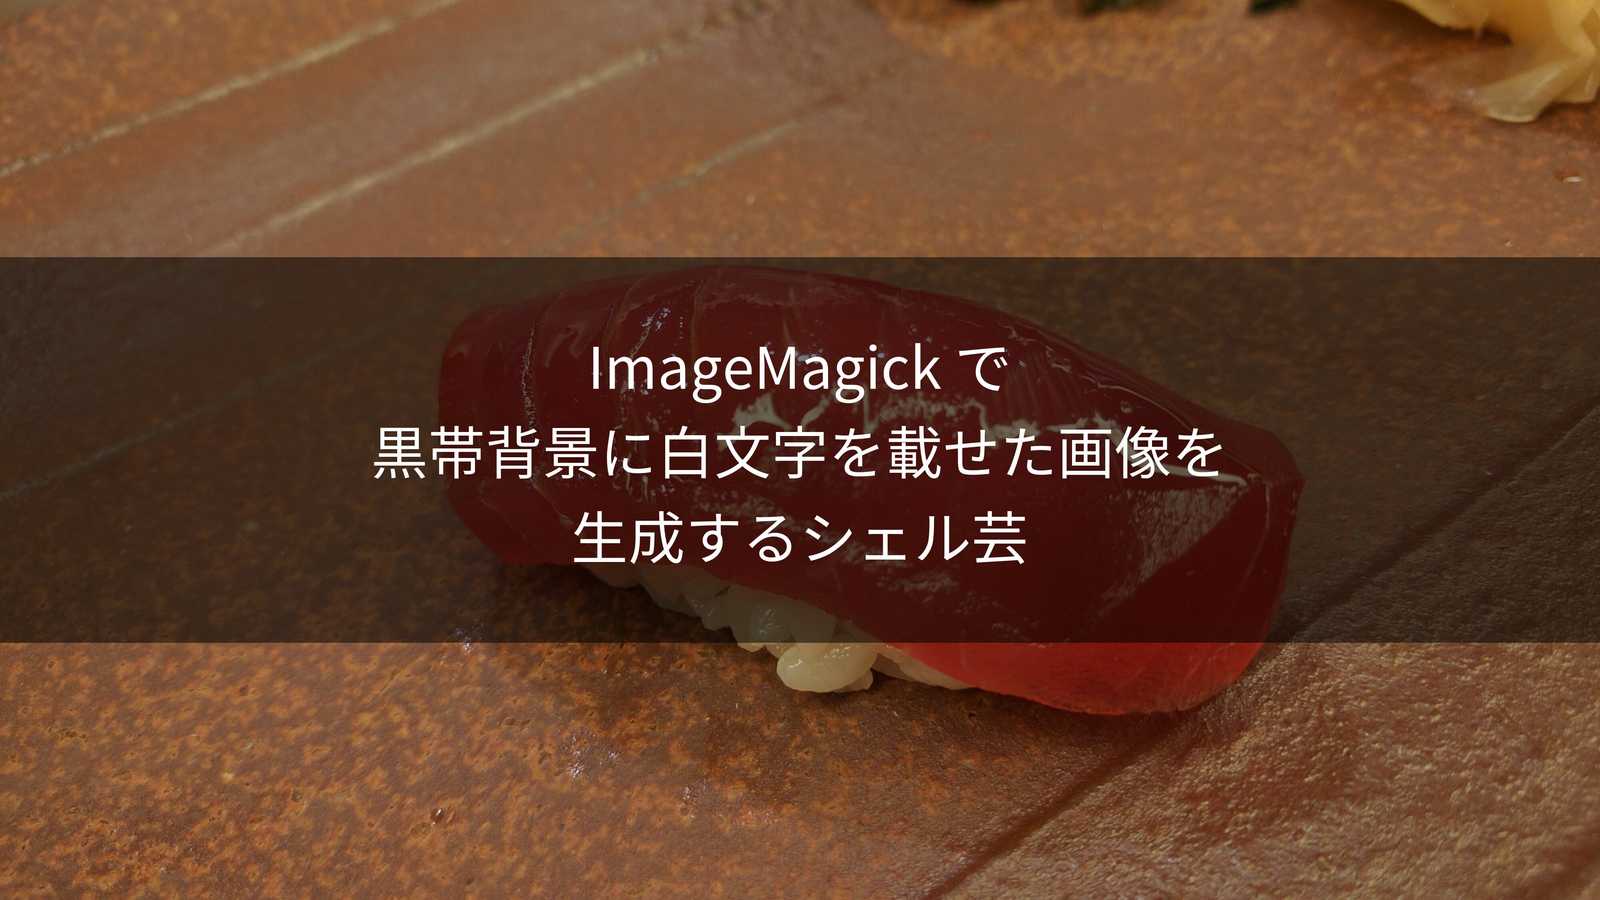 eyecatch image of ImageMagick で黒帯背景に白文字を載せた画像を生成するシェル芸